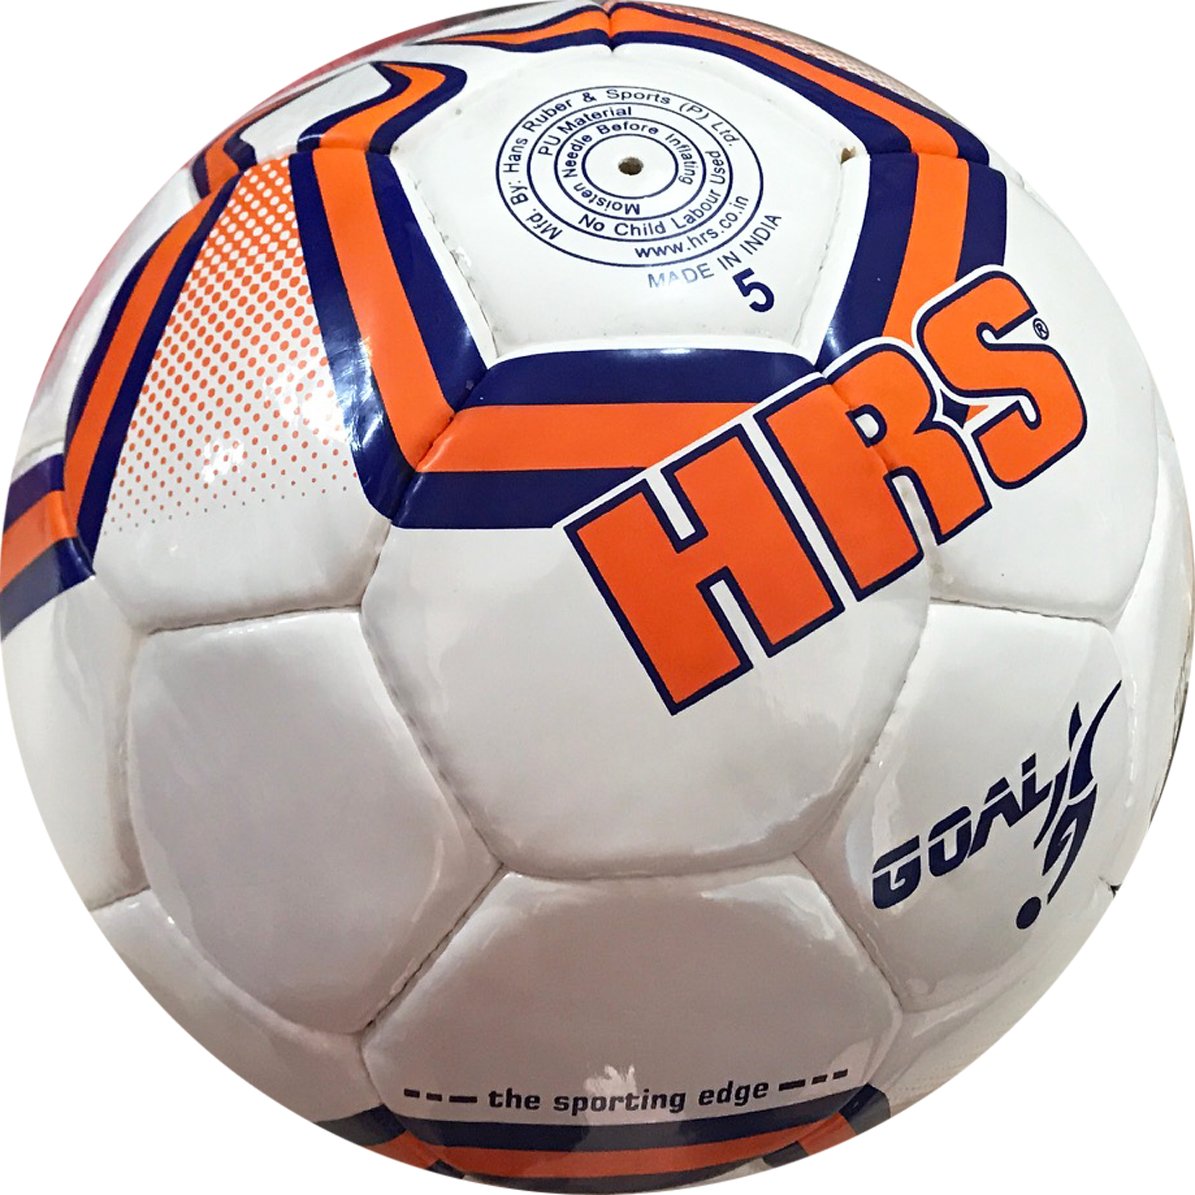 HRS Goal Imported PU Professional Match Football - Size 5 (Orange/Blue) - Best Price online Prokicksports.com